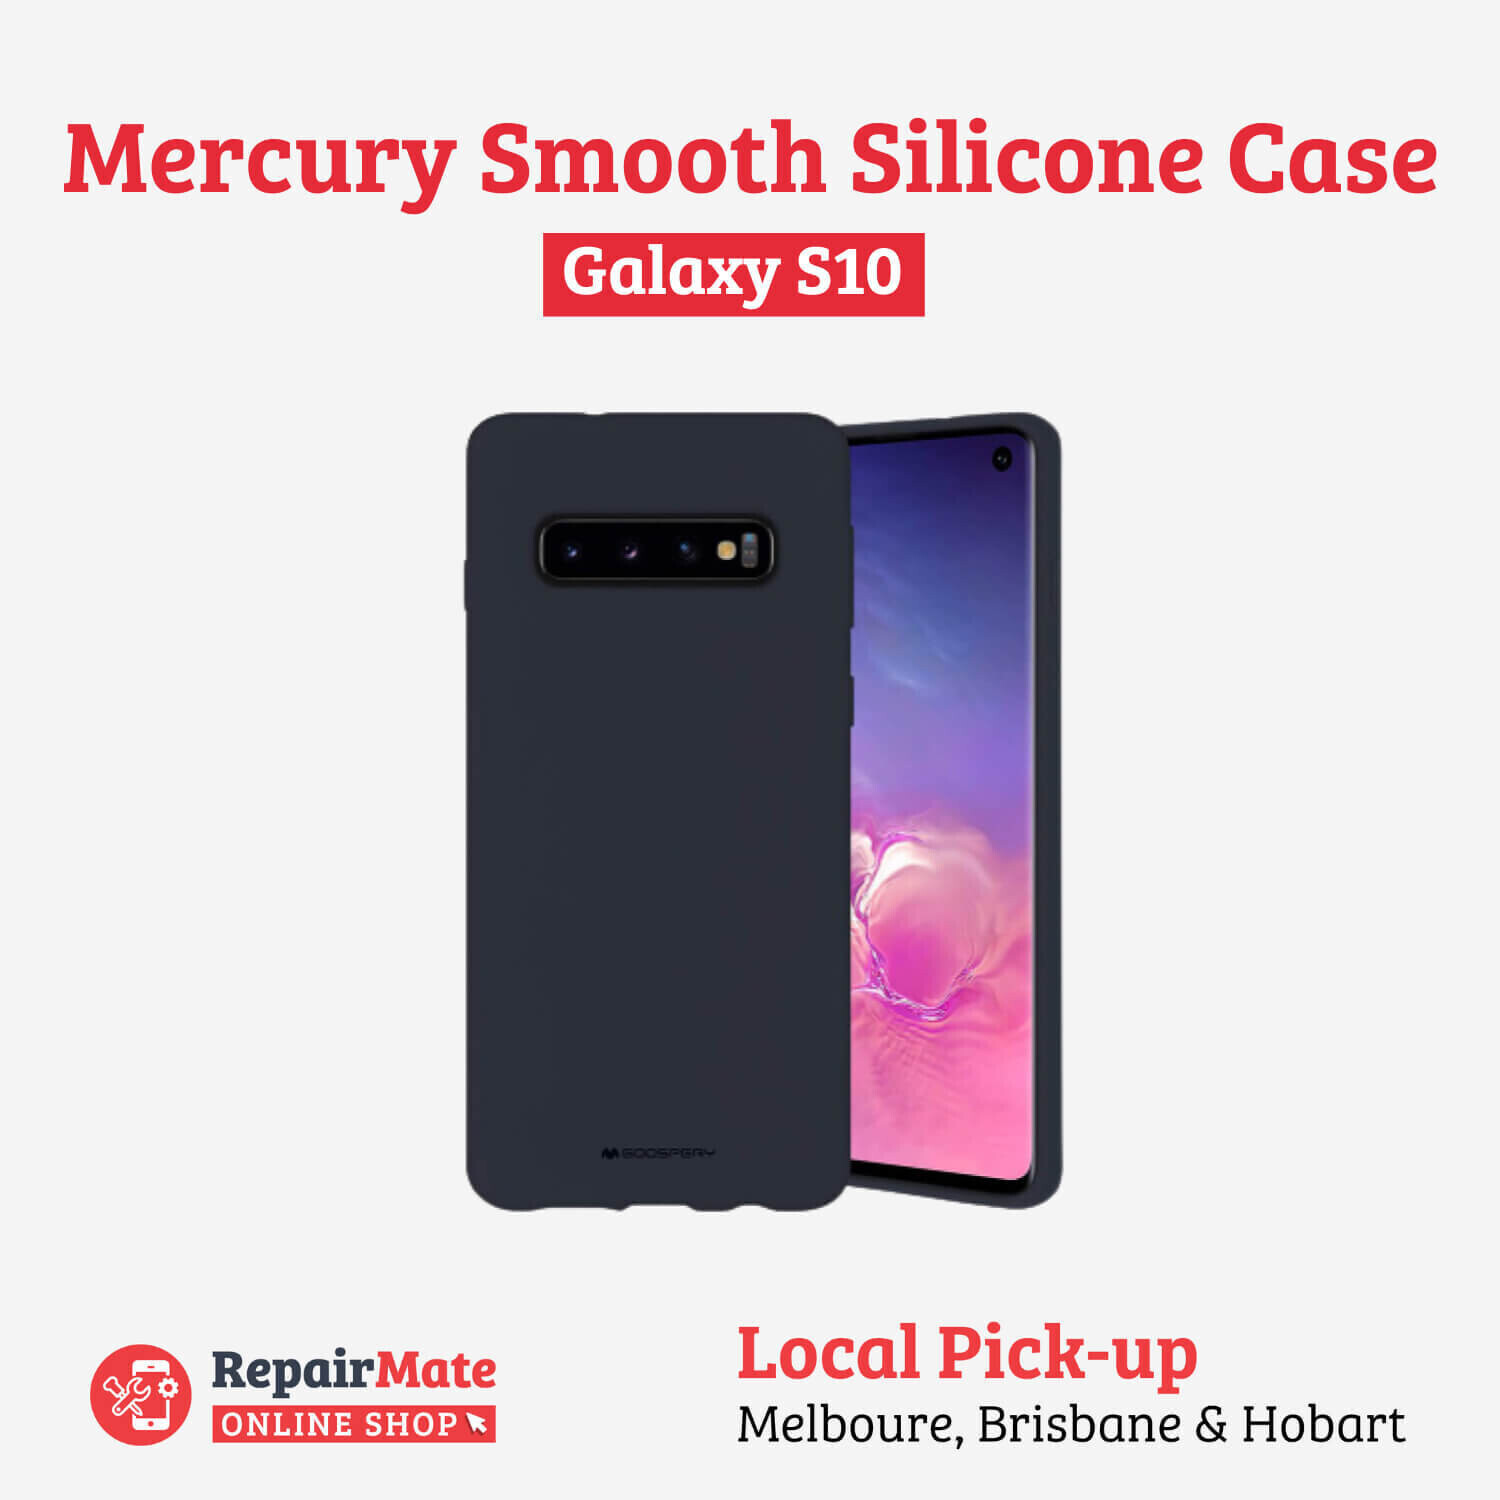 Samsung Galaxy S10 Mercury Smooth Silicone Case